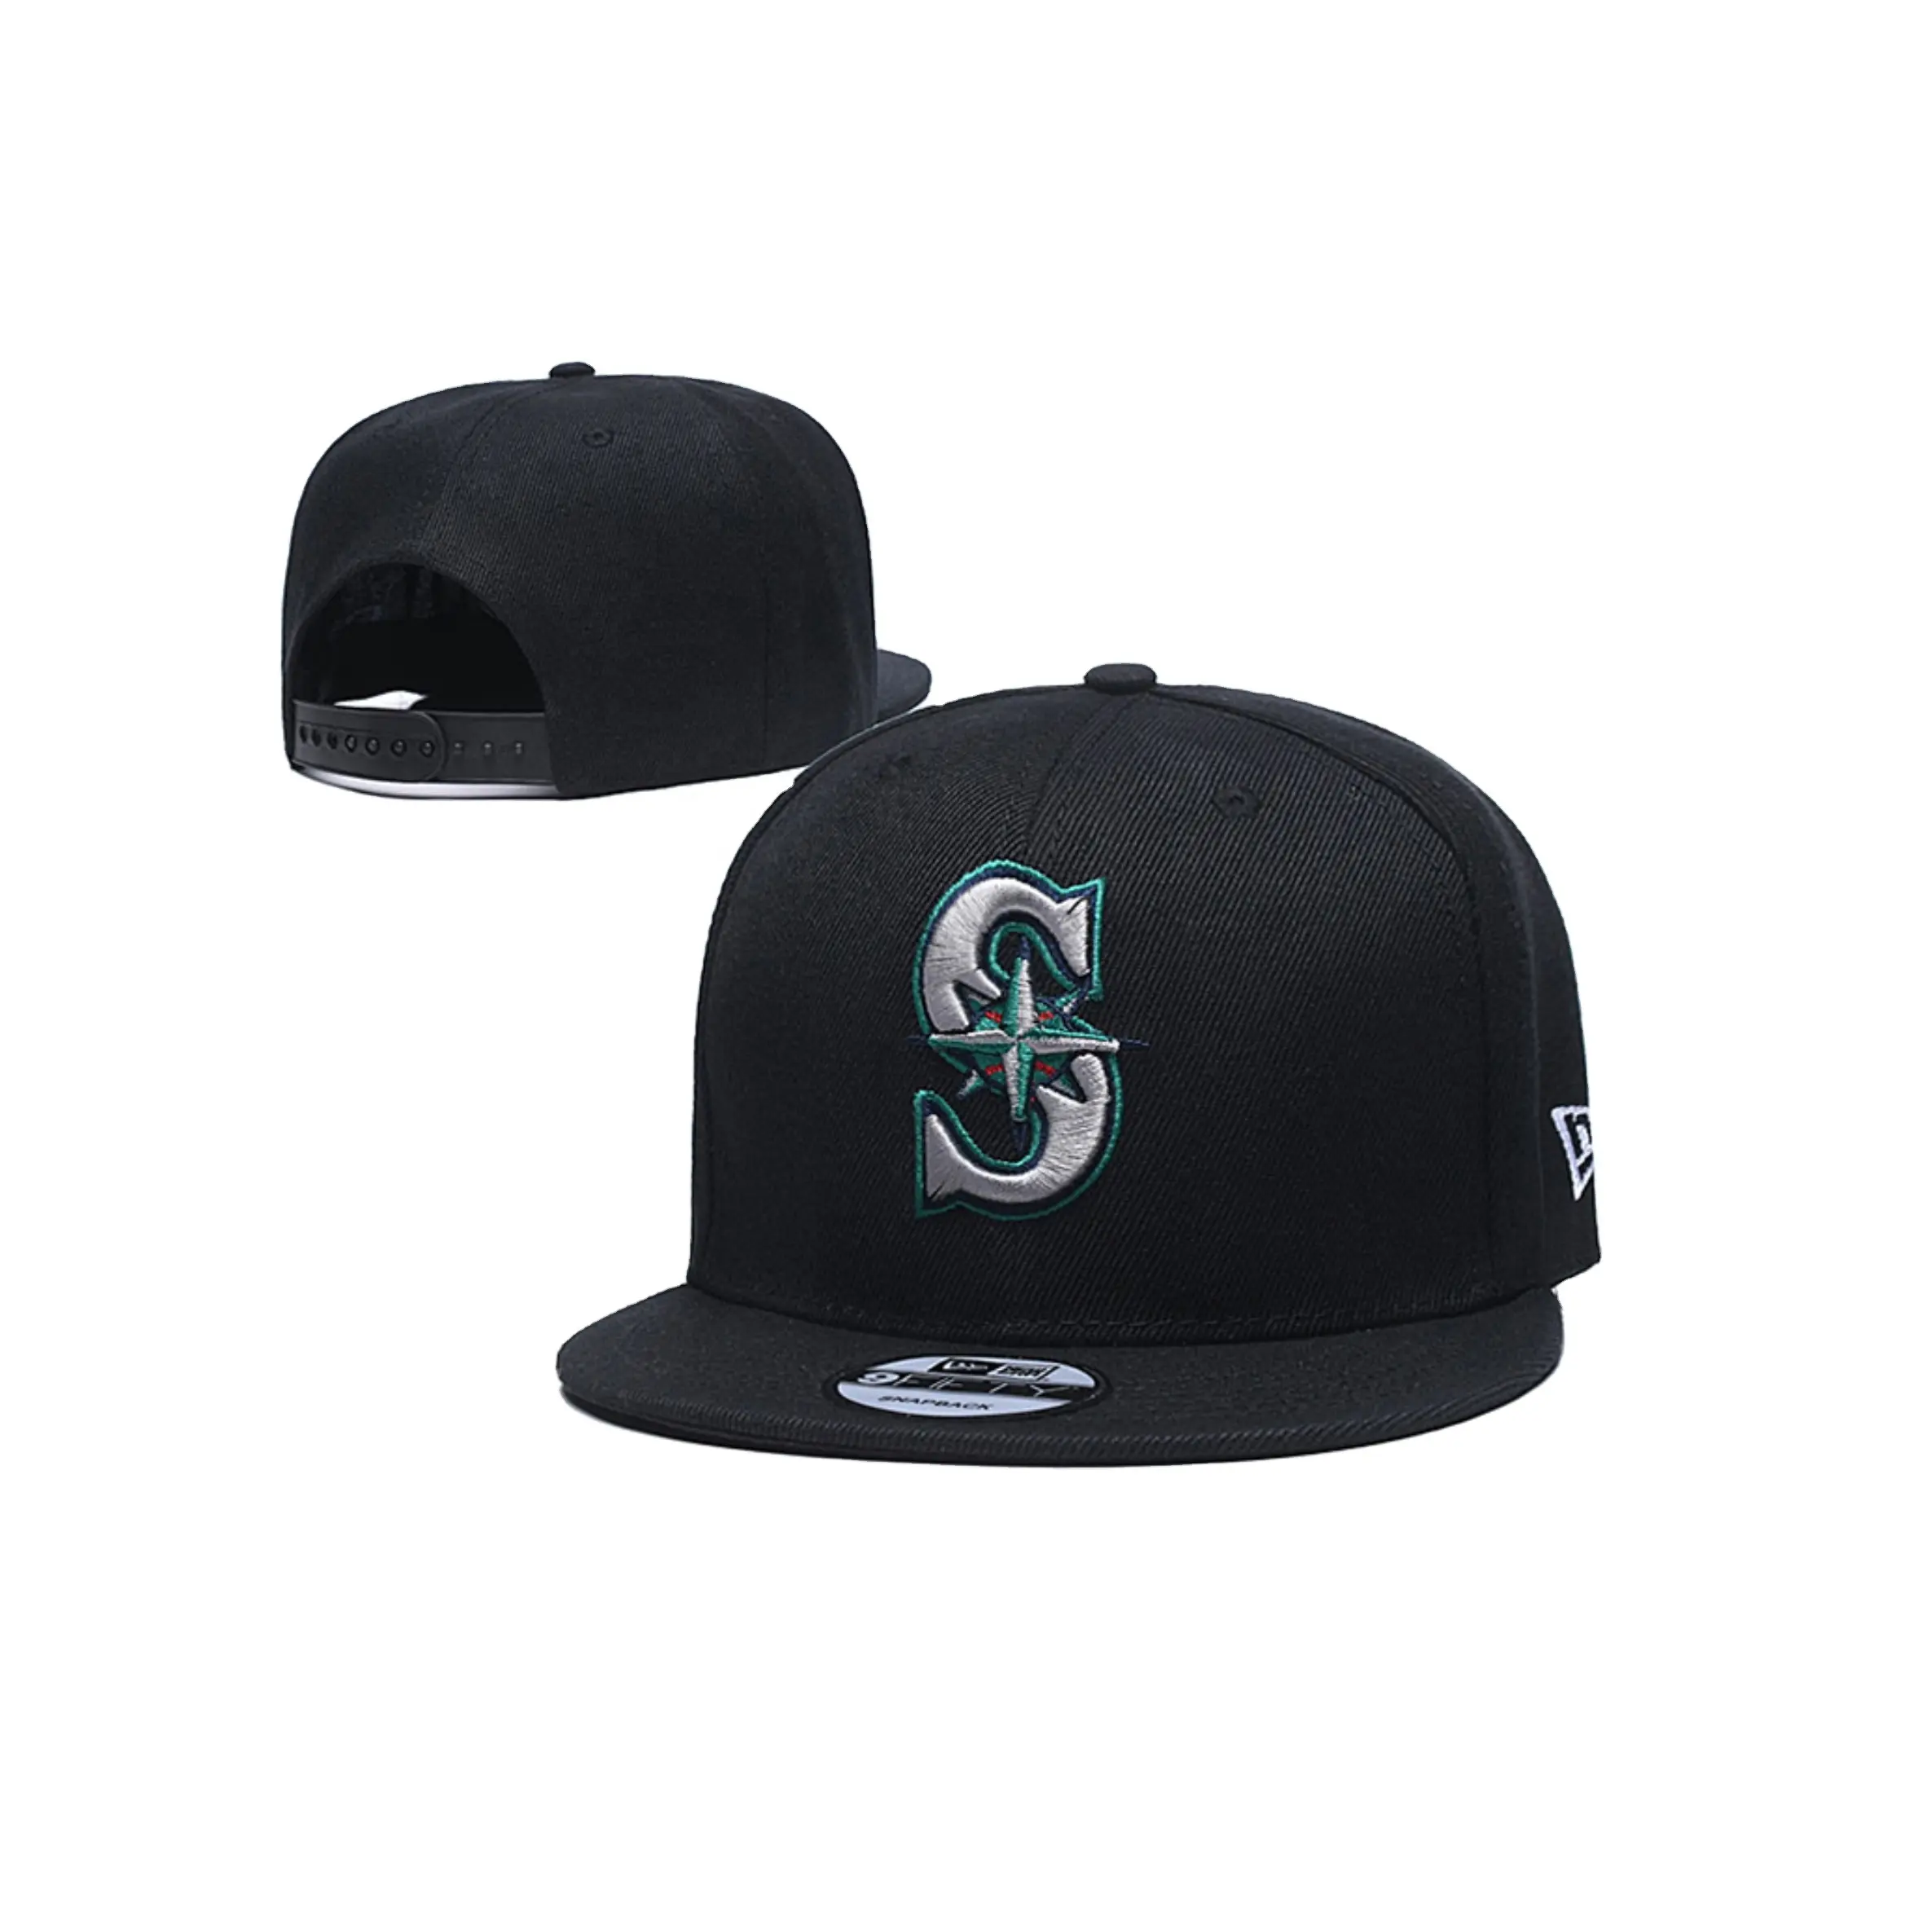 3D Embroidery New Designer Era Cheap Fitted Hats Snapback Cap Designer Baseball Sports Caps Custom Hats